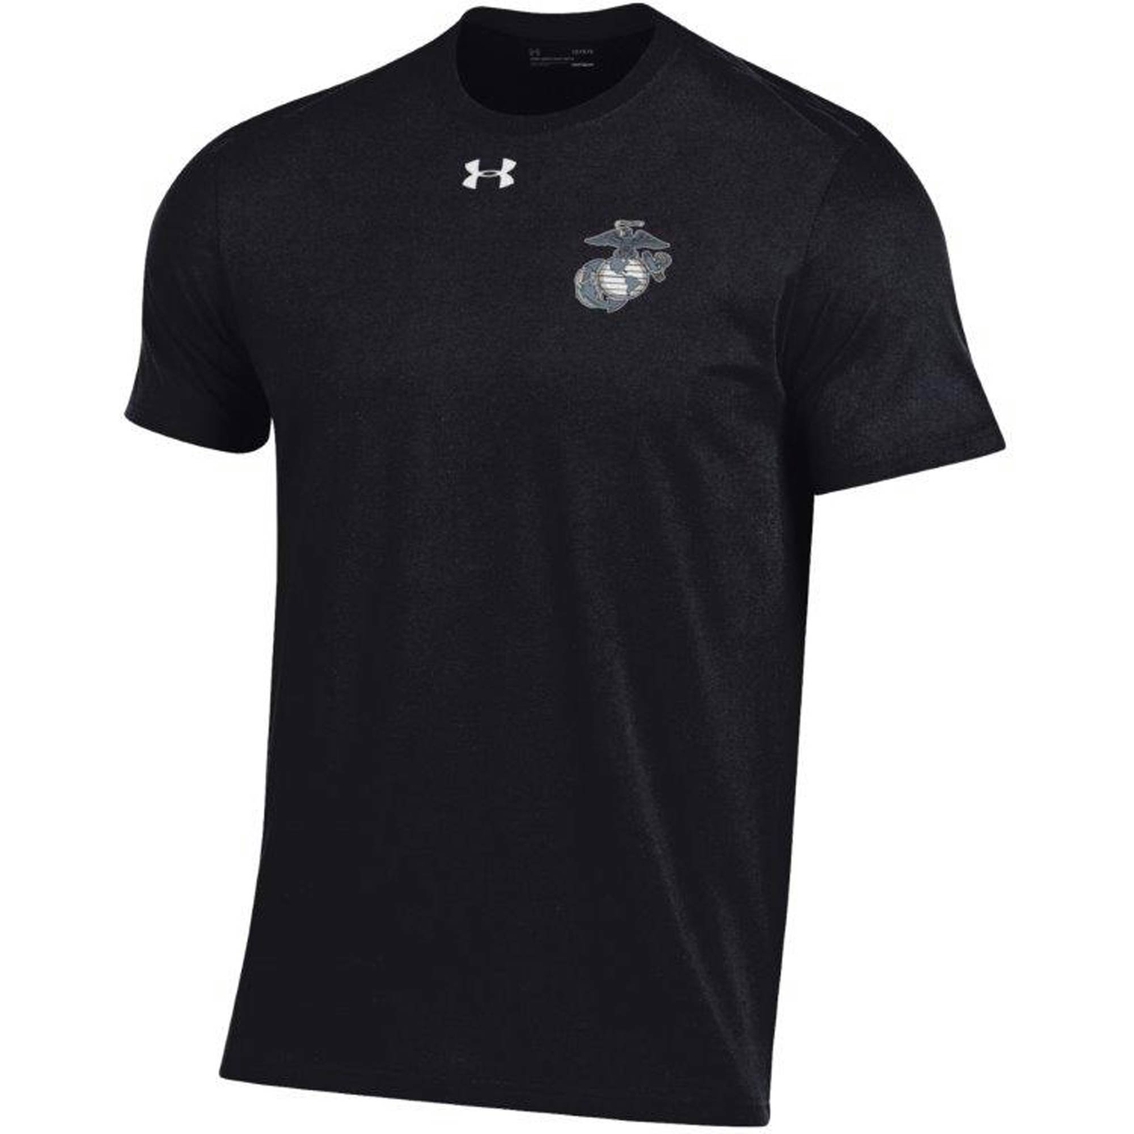 Under Armour Marine Corps Logo Performance Cotton Tee | Shirts ...